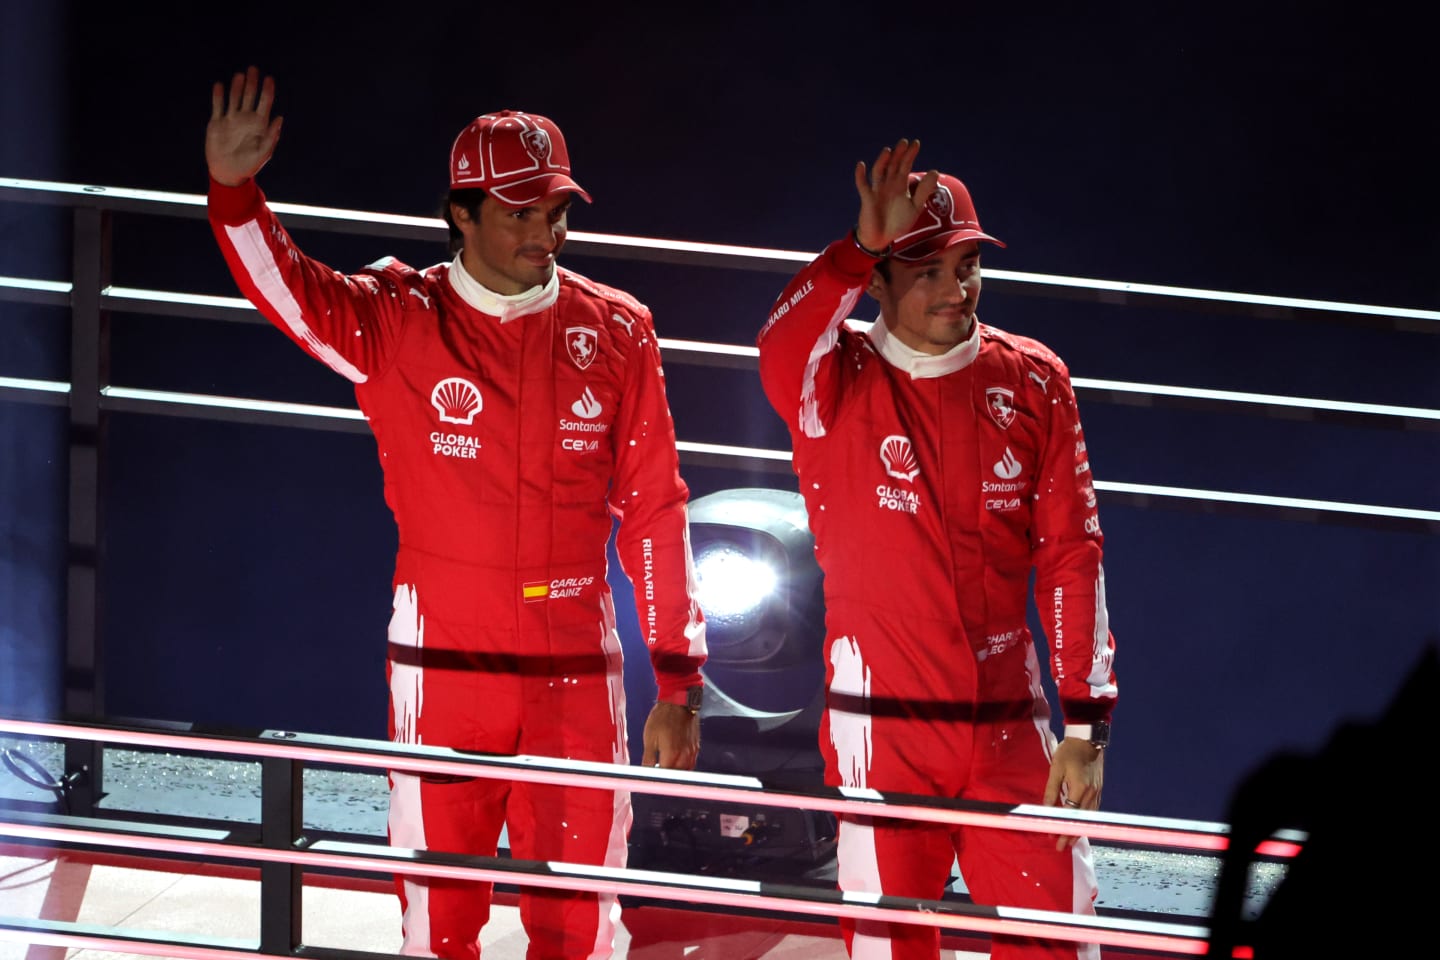 LAS VEGAS, NEVADA - NOVEMBER 15: Charles Leclerc of Monaco and Ferrari and Carlos Sainz of Spain